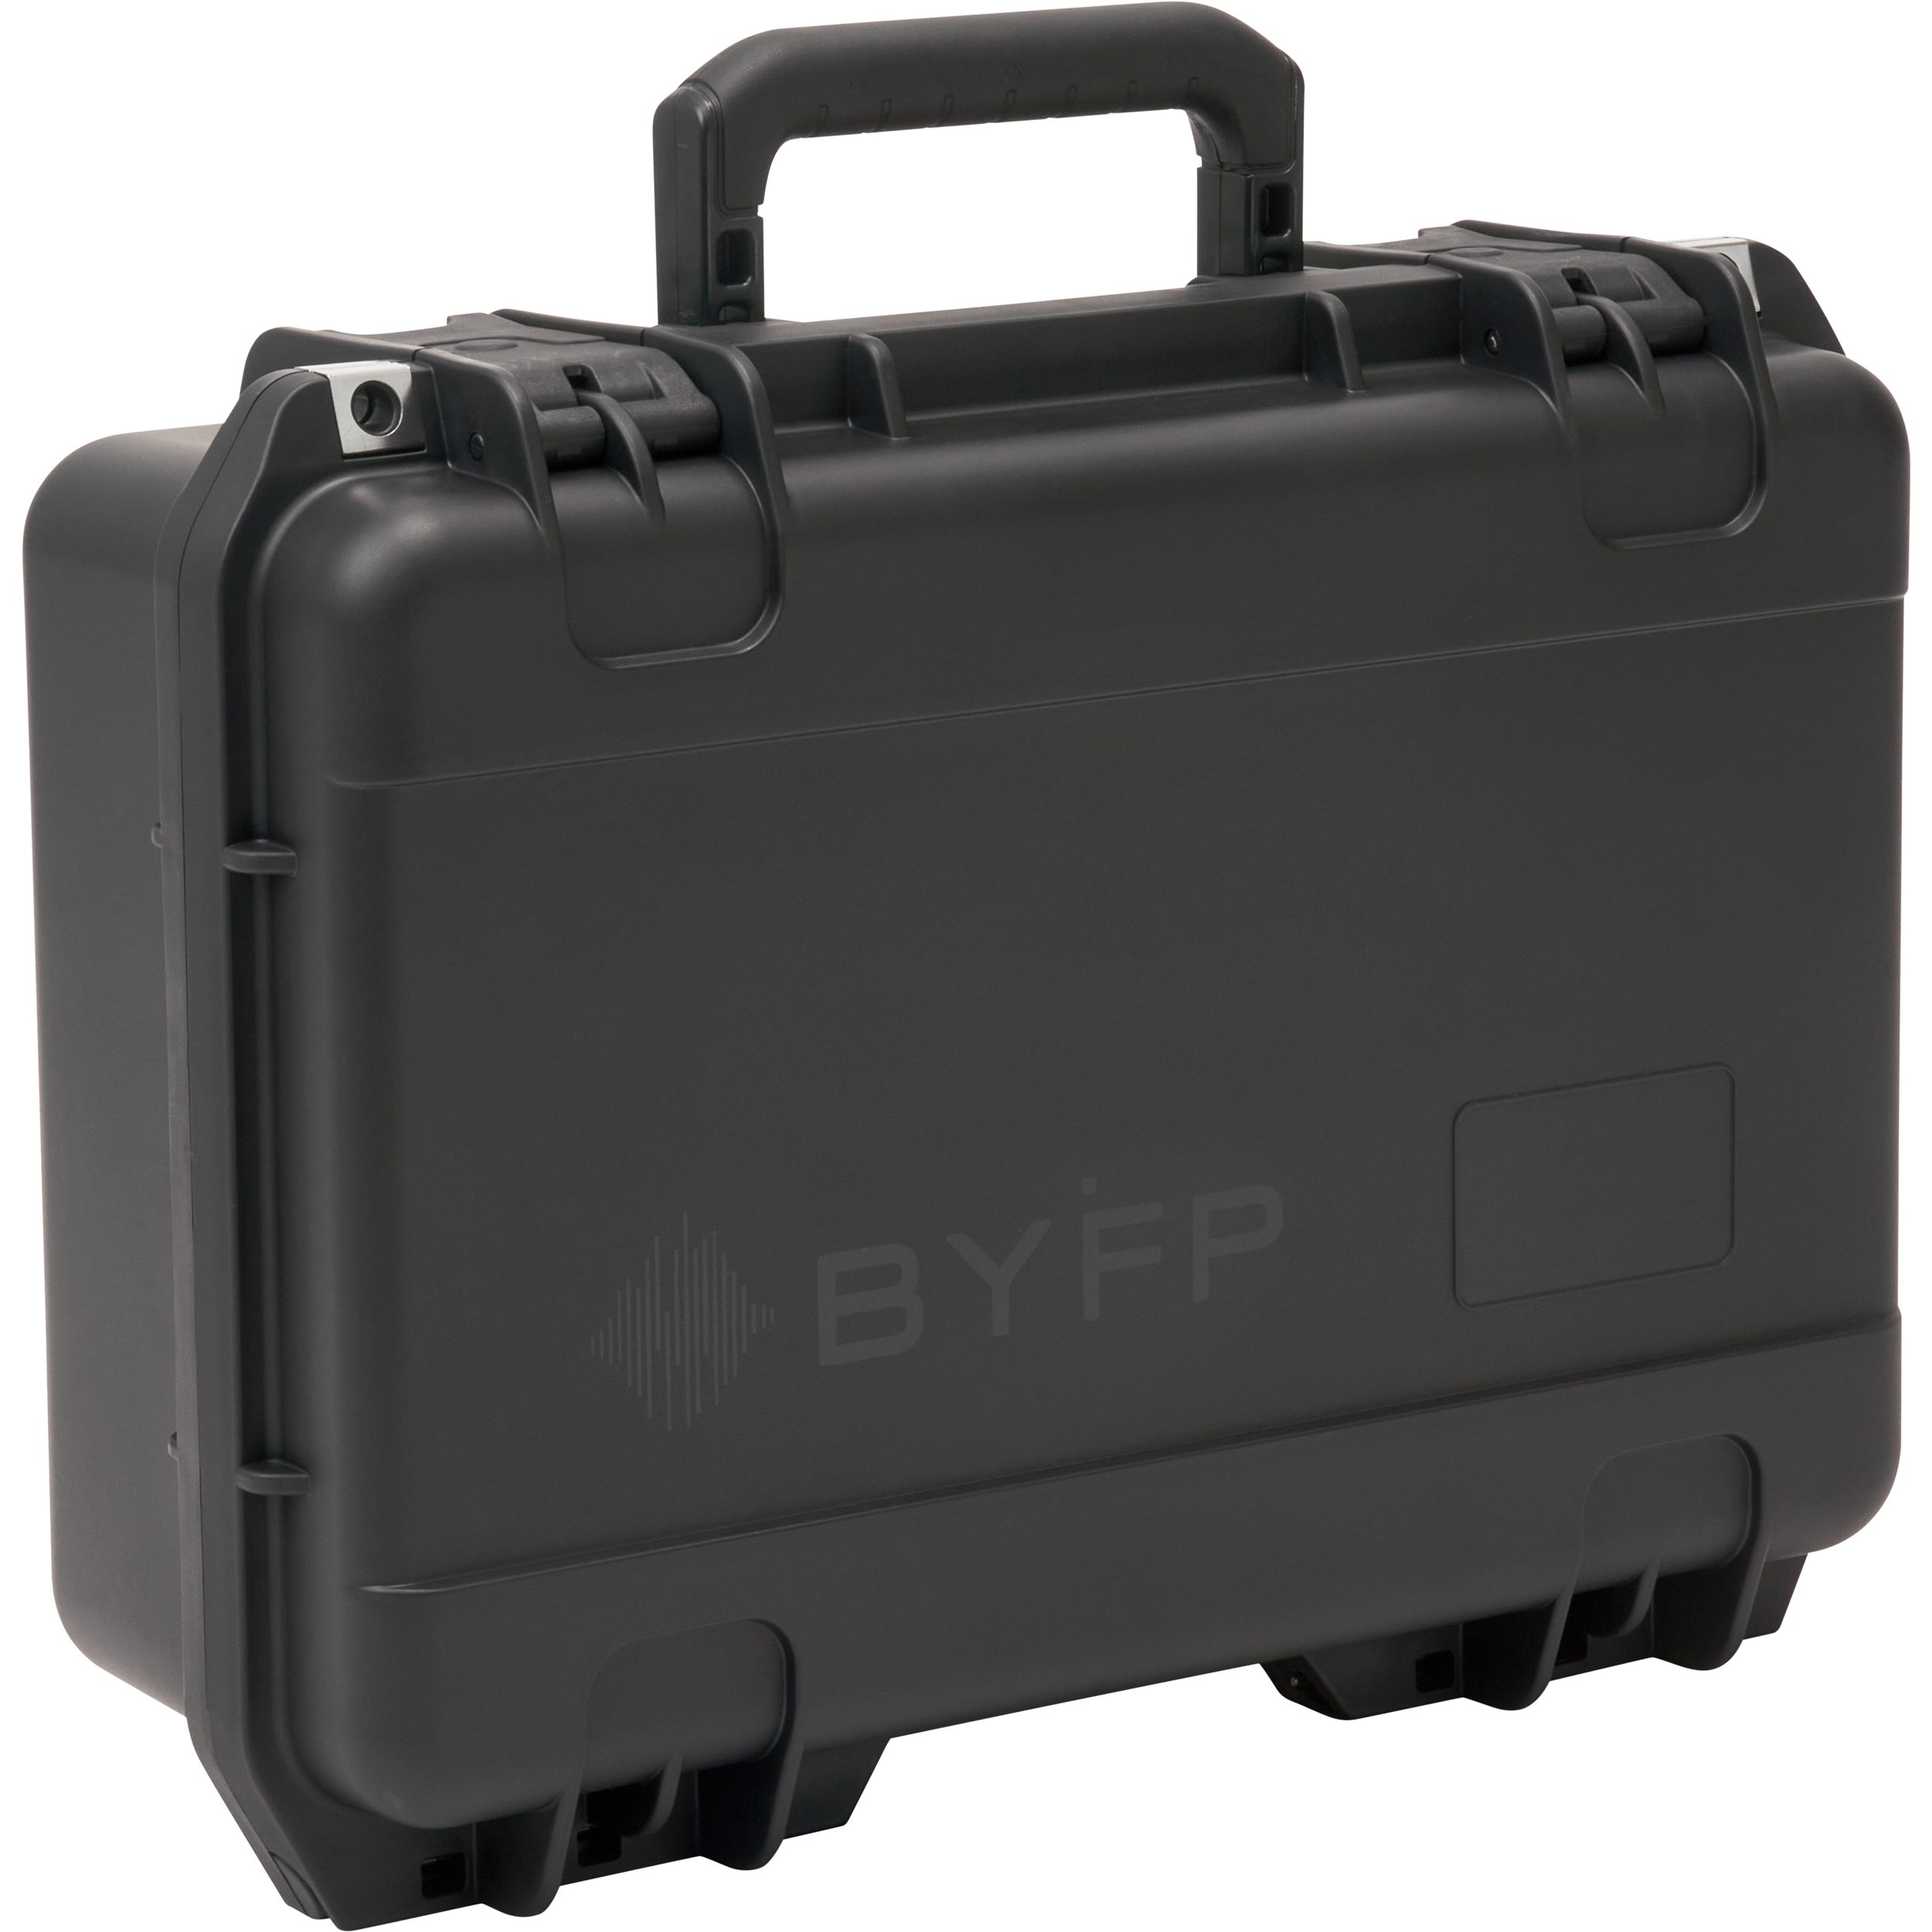 BYFP ipCase for 2x Roland V-02